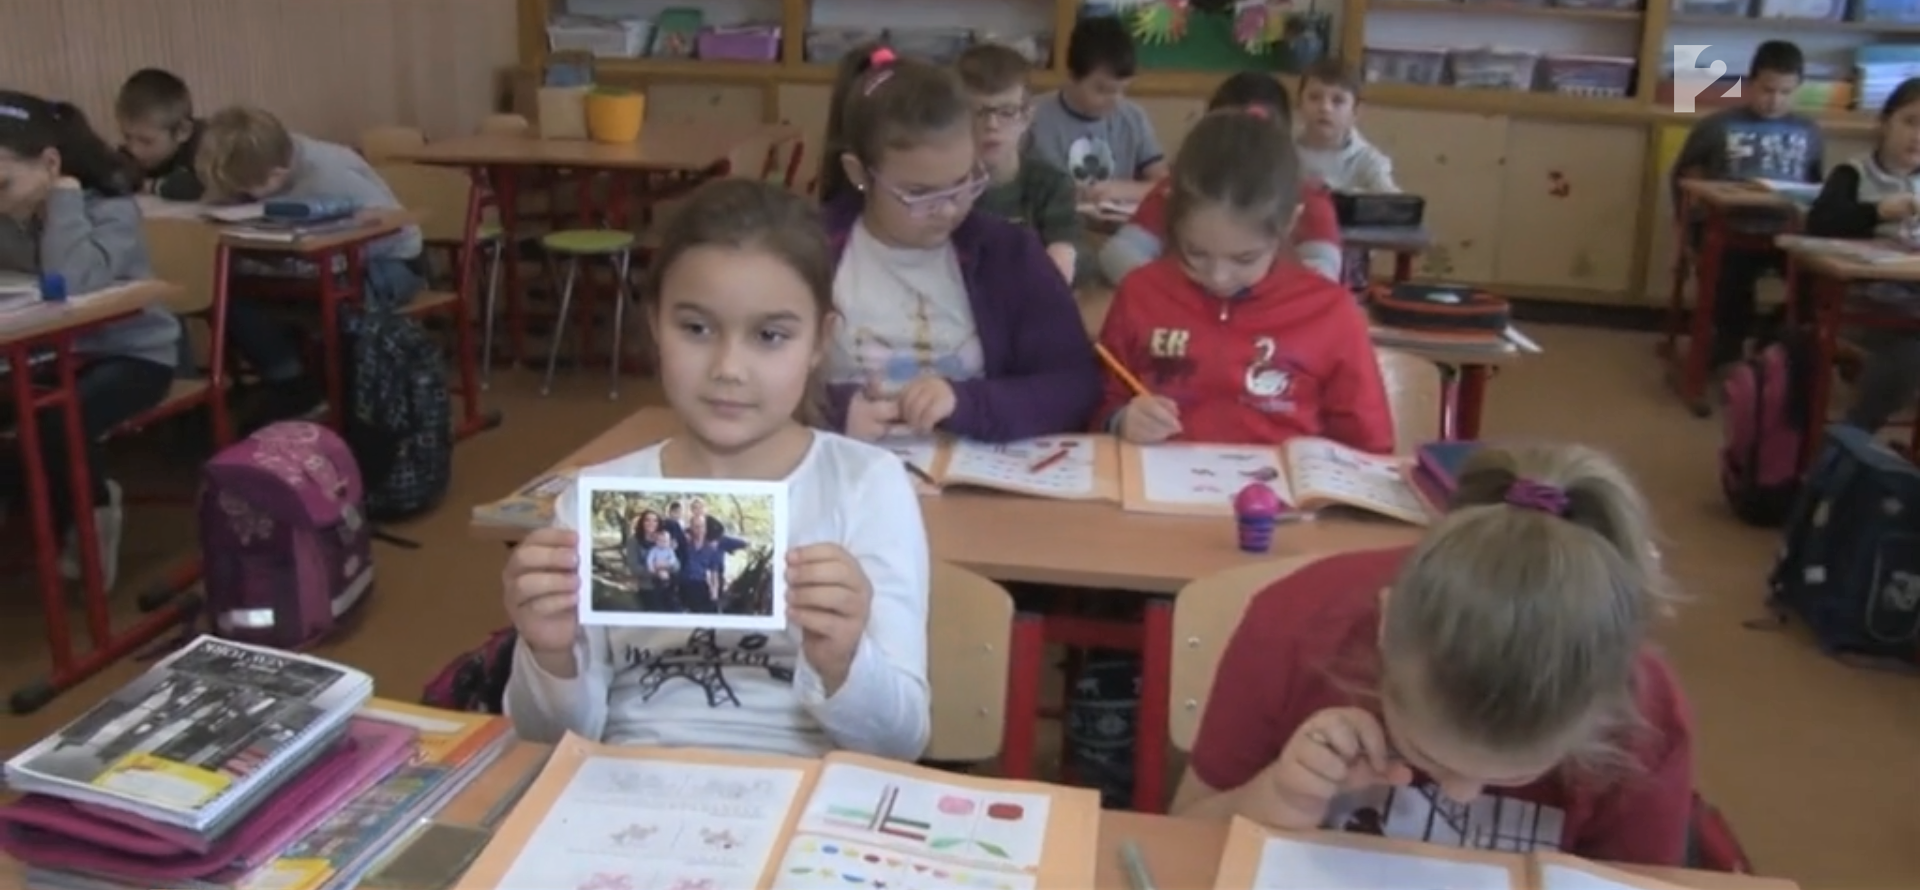 Hungary, students, Miskolc, school, letter, Prince William